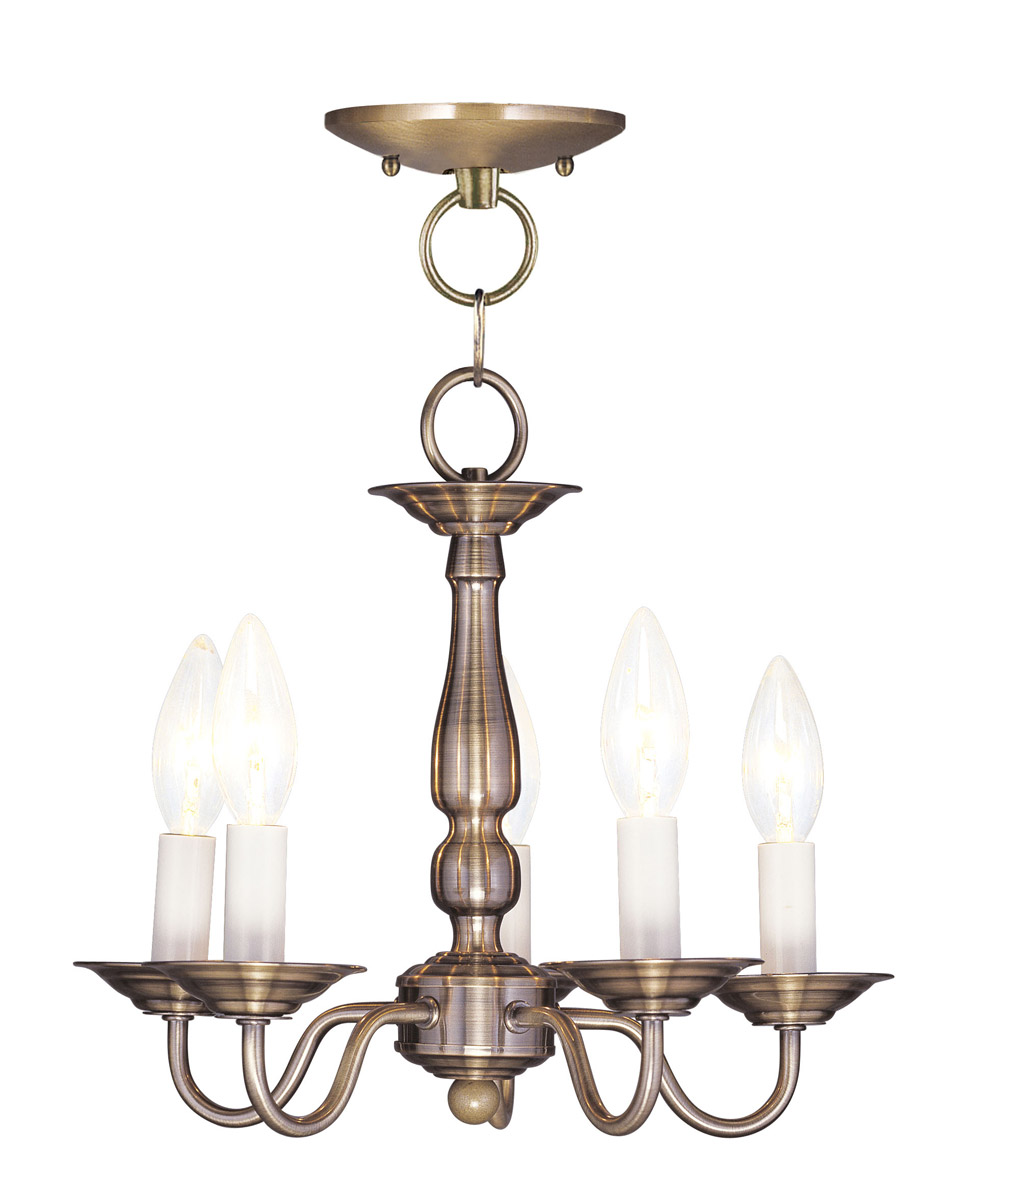 5 Light Antique Brass Chain Hang/Ceiling Light fixture with Steel base  material-Lighting Lumens - Lighting lumens